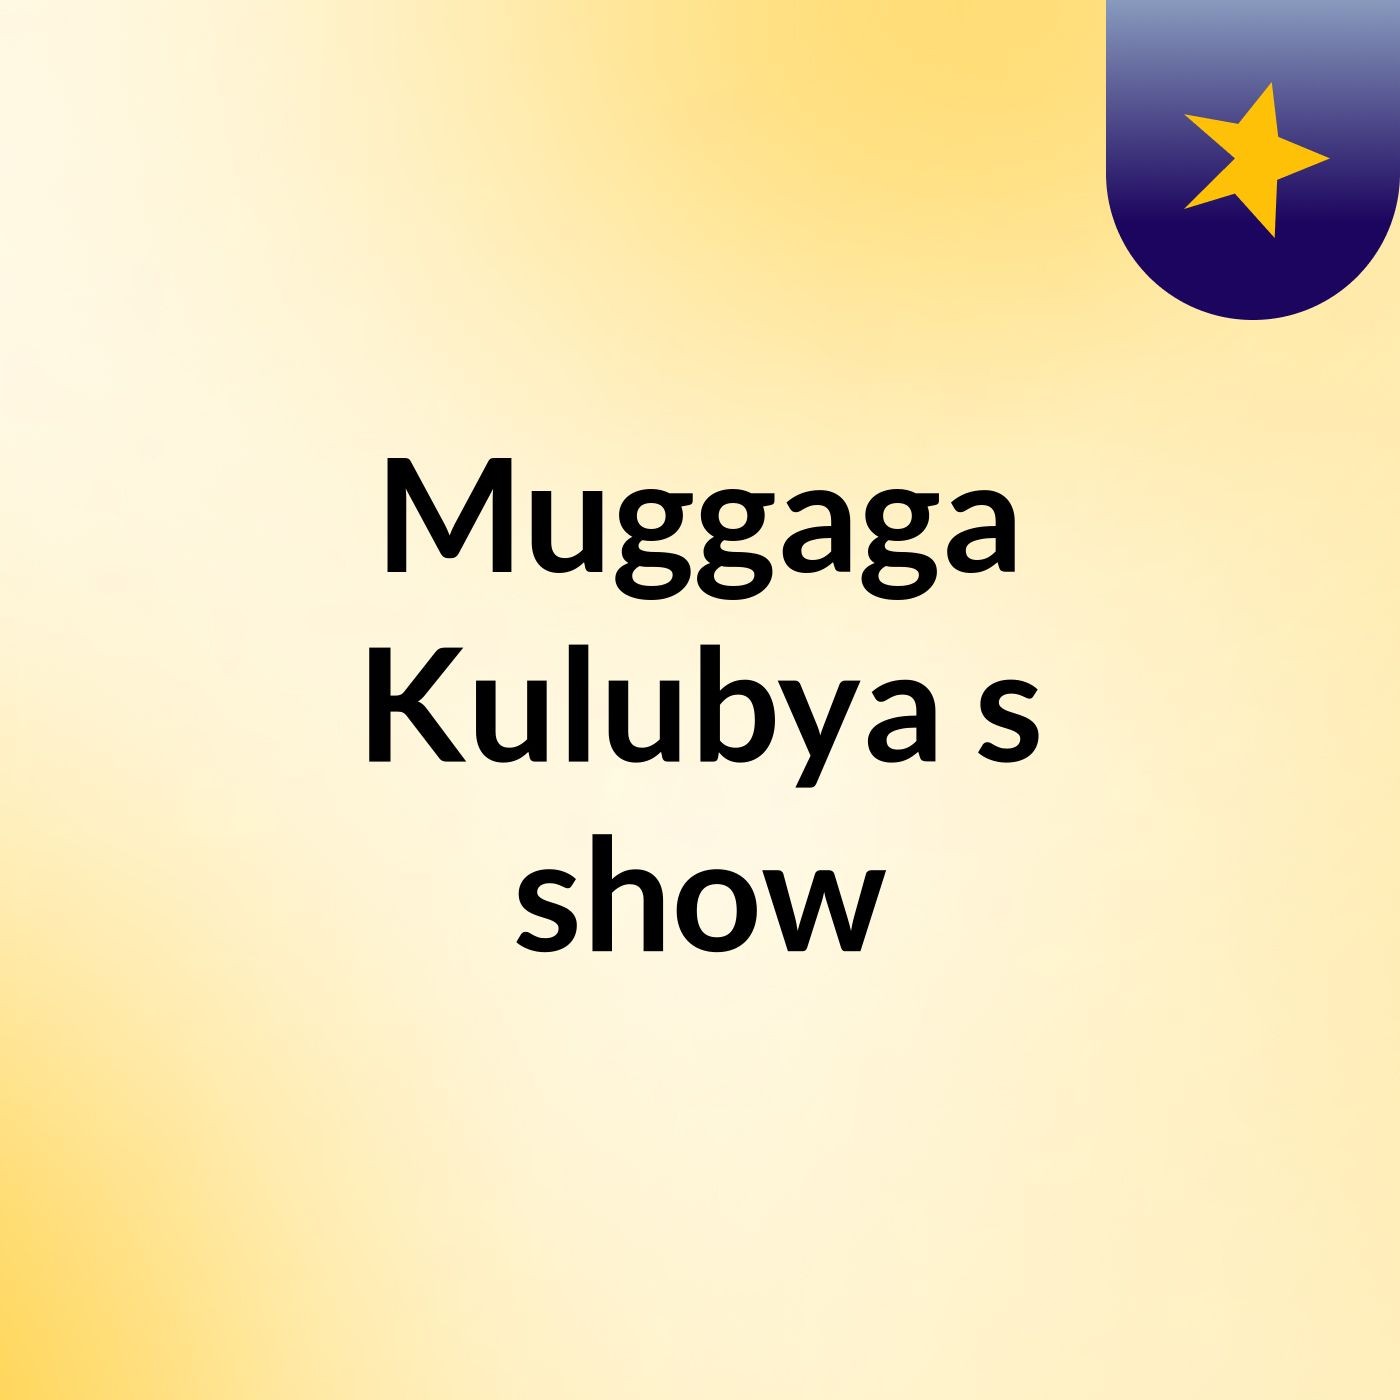 Muggaga Kulubya's show